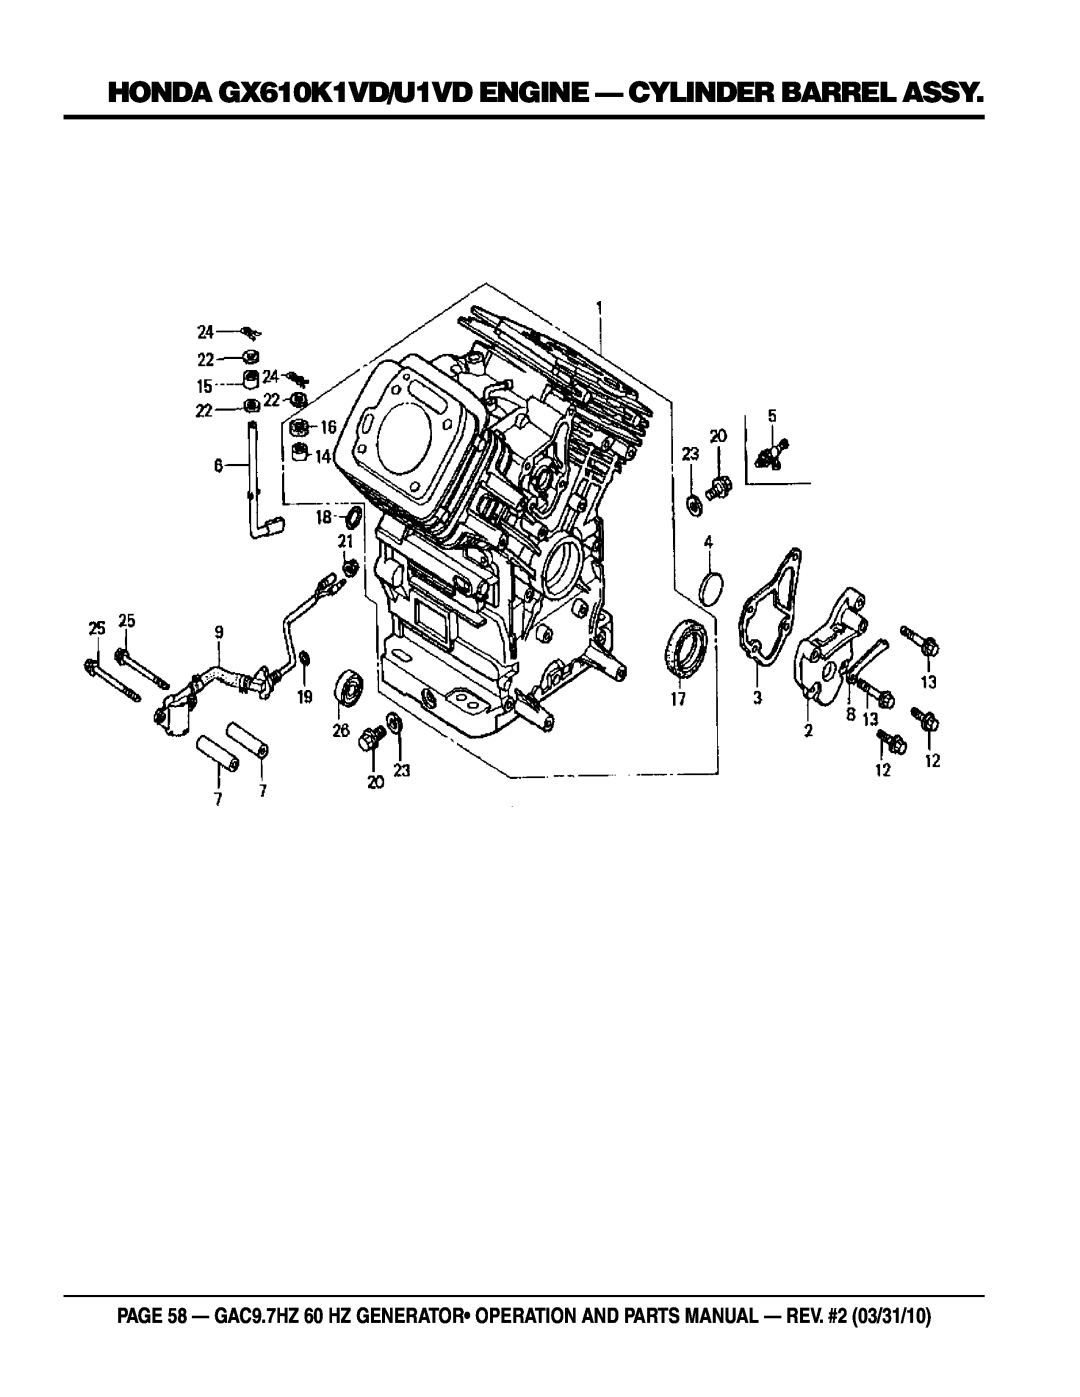 Multiquip GAC-9.7HZ manual HONDA GX610K1VD/U1VD ENGINE - CYLINDER BARREL ASSY 